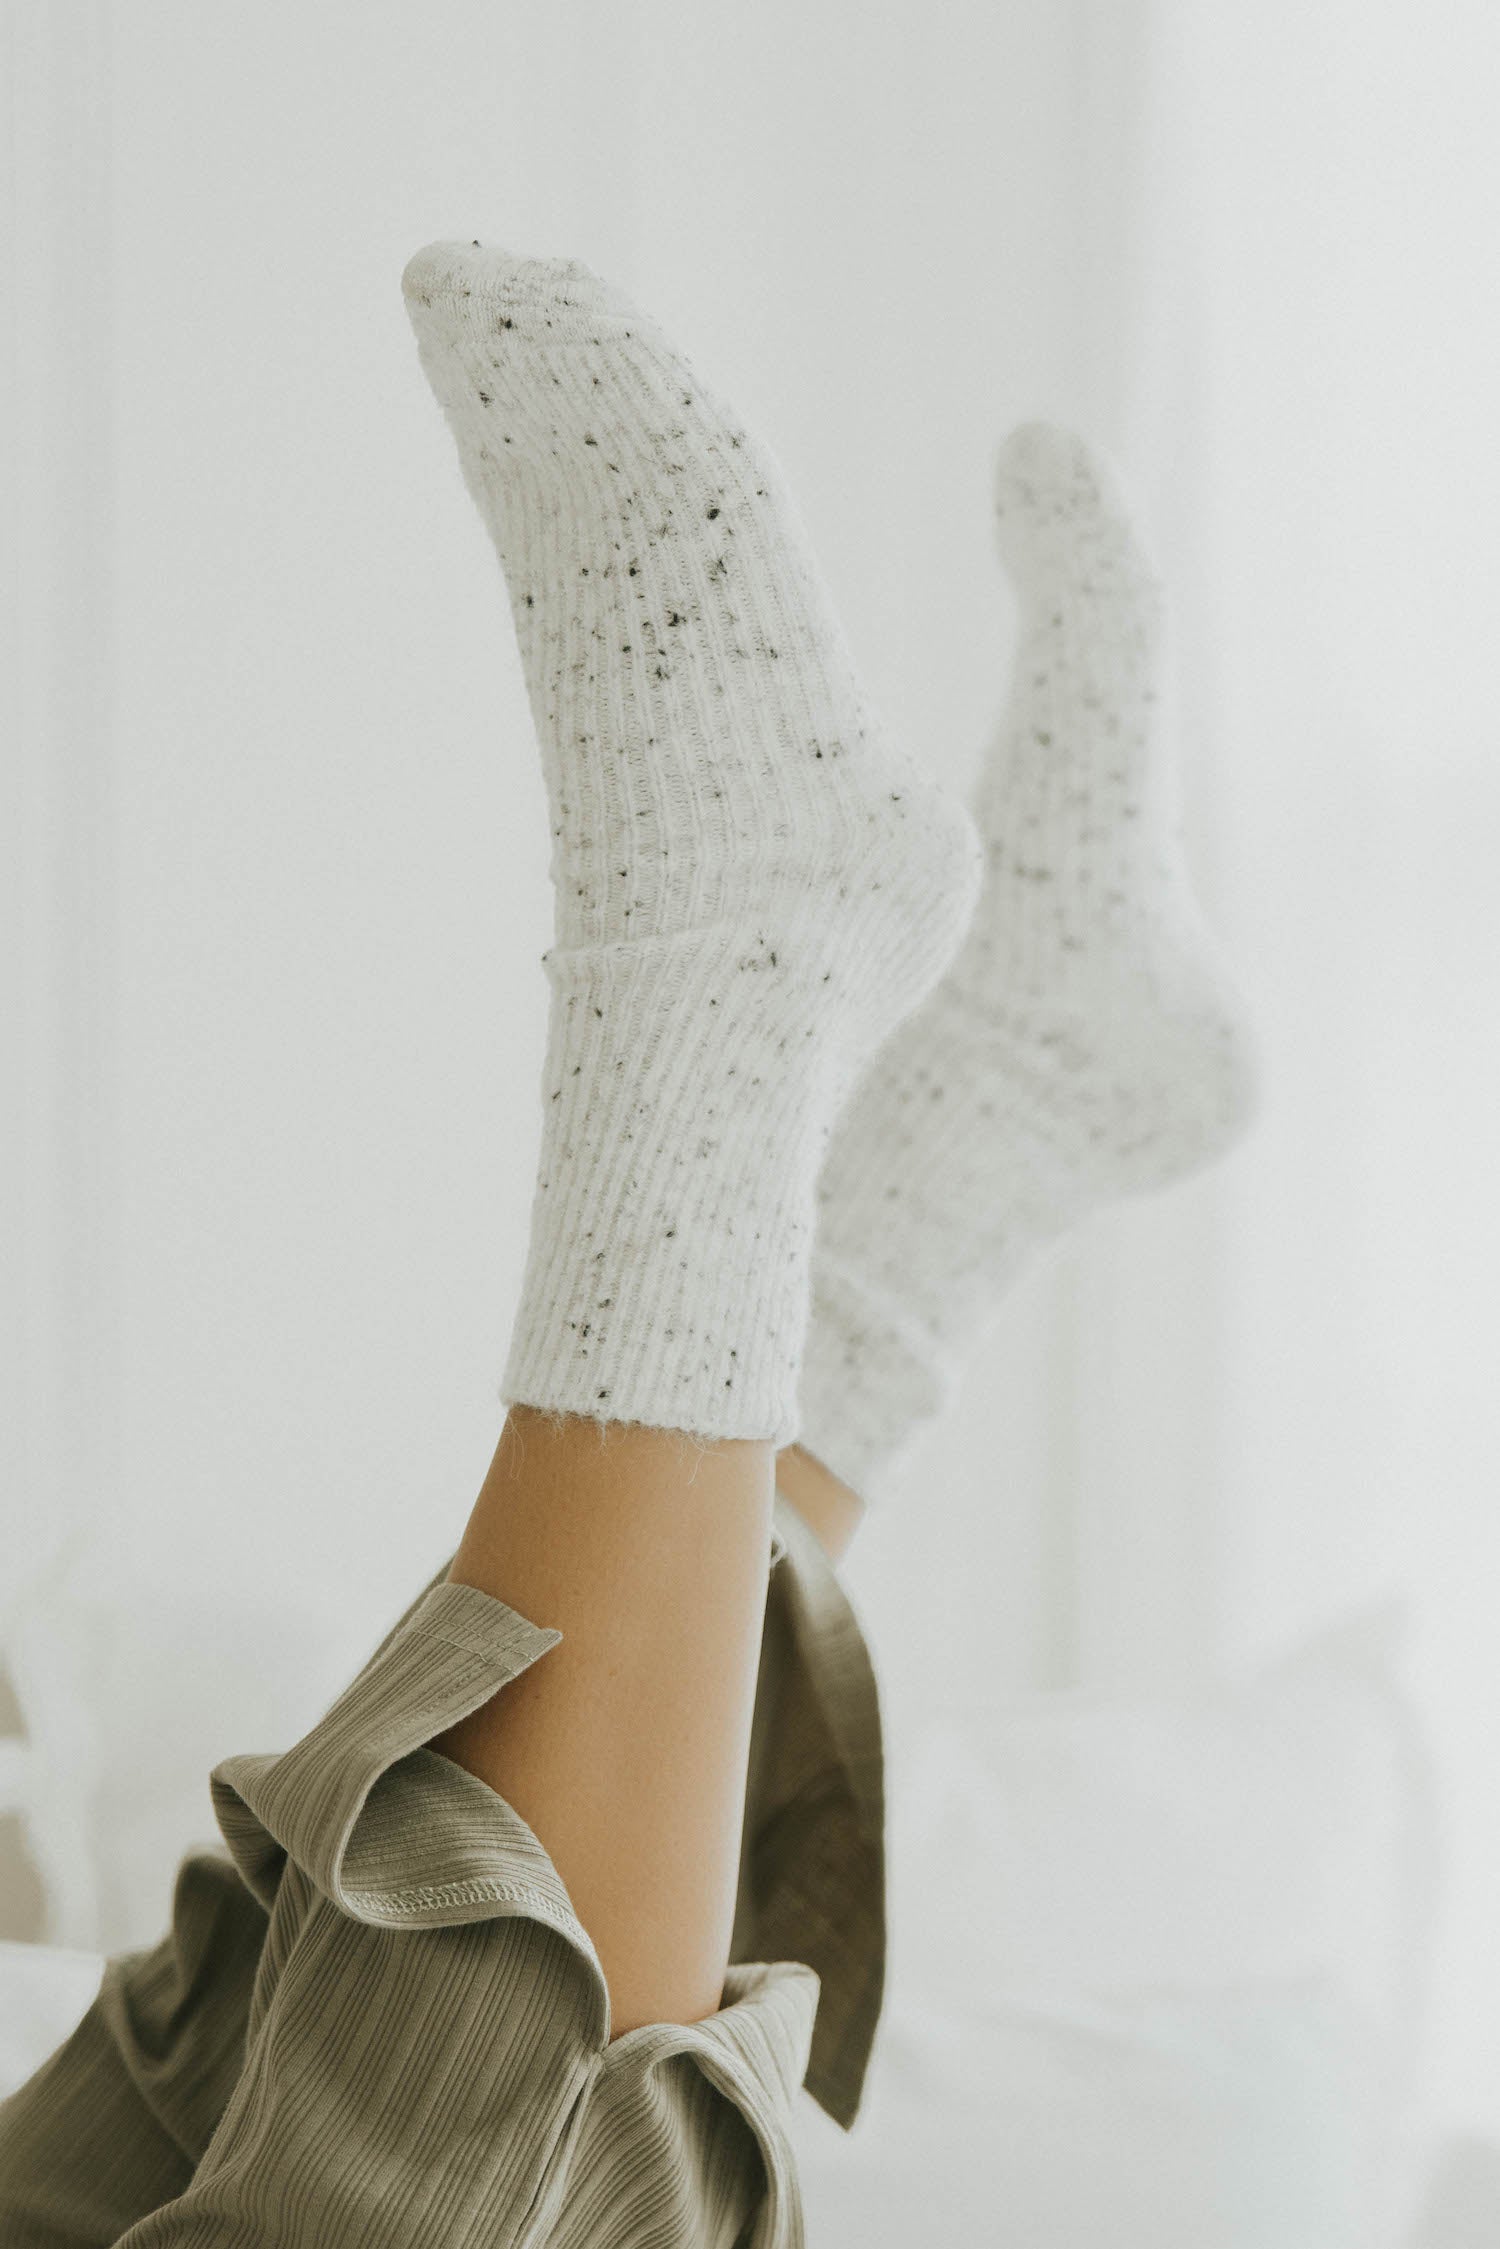 Matching wool socks for women.